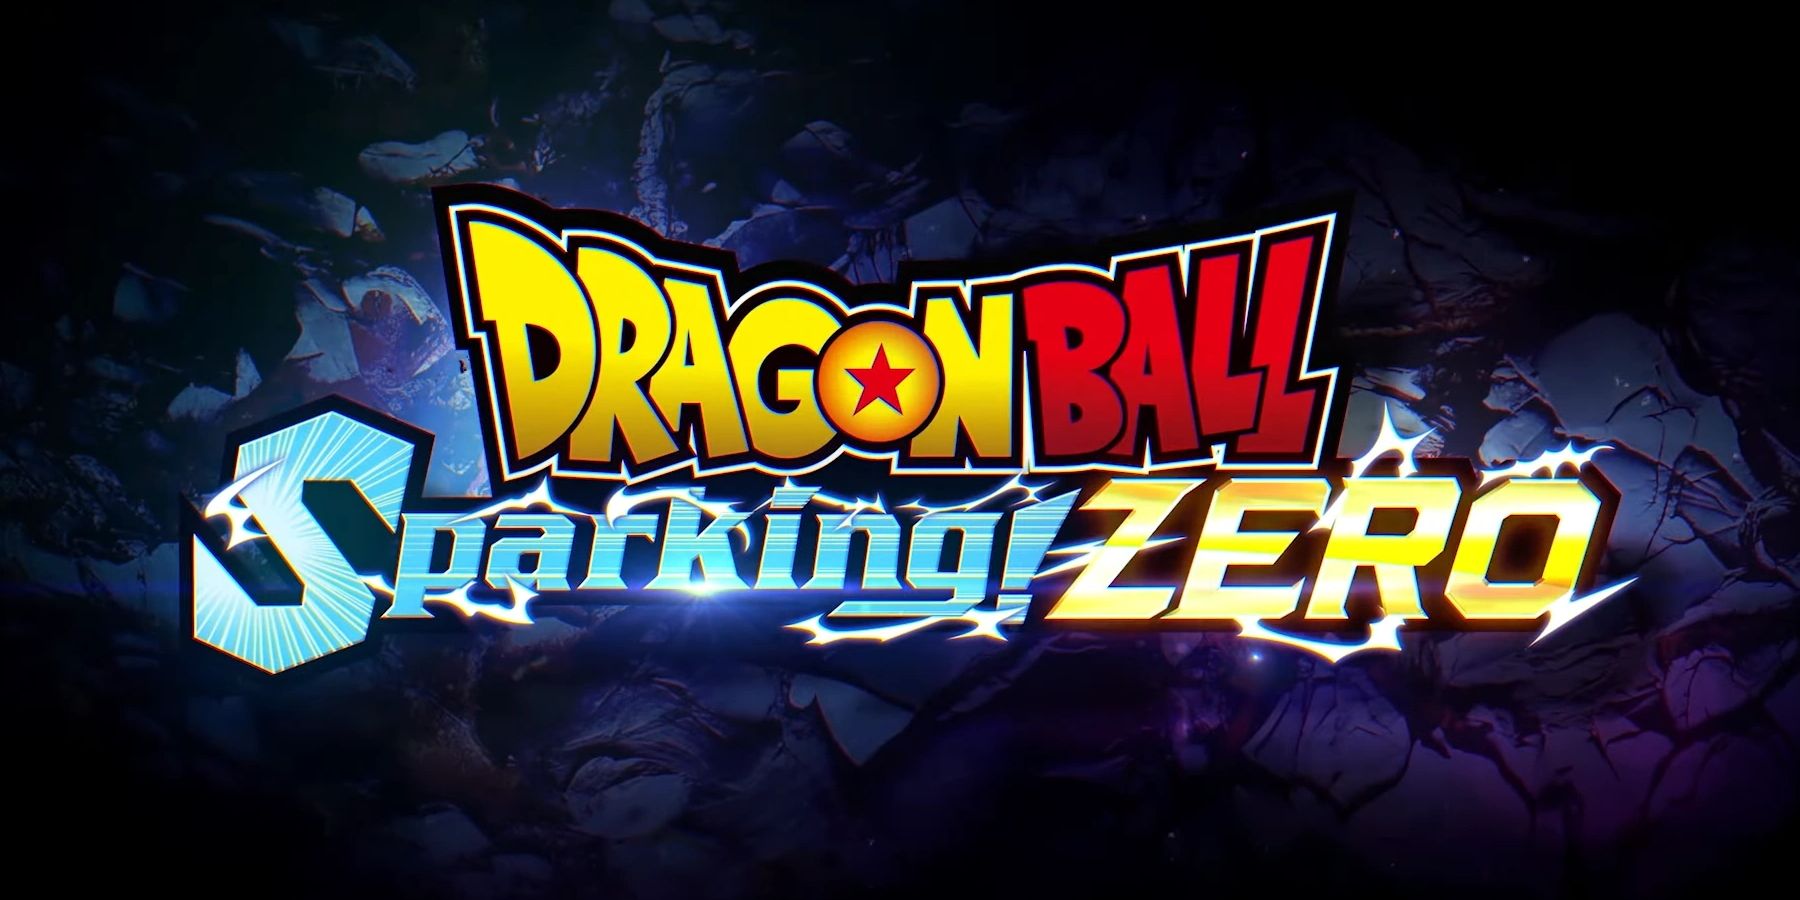 Dragon Ball Z: Cooler Logo by Kahdin on DeviantArt